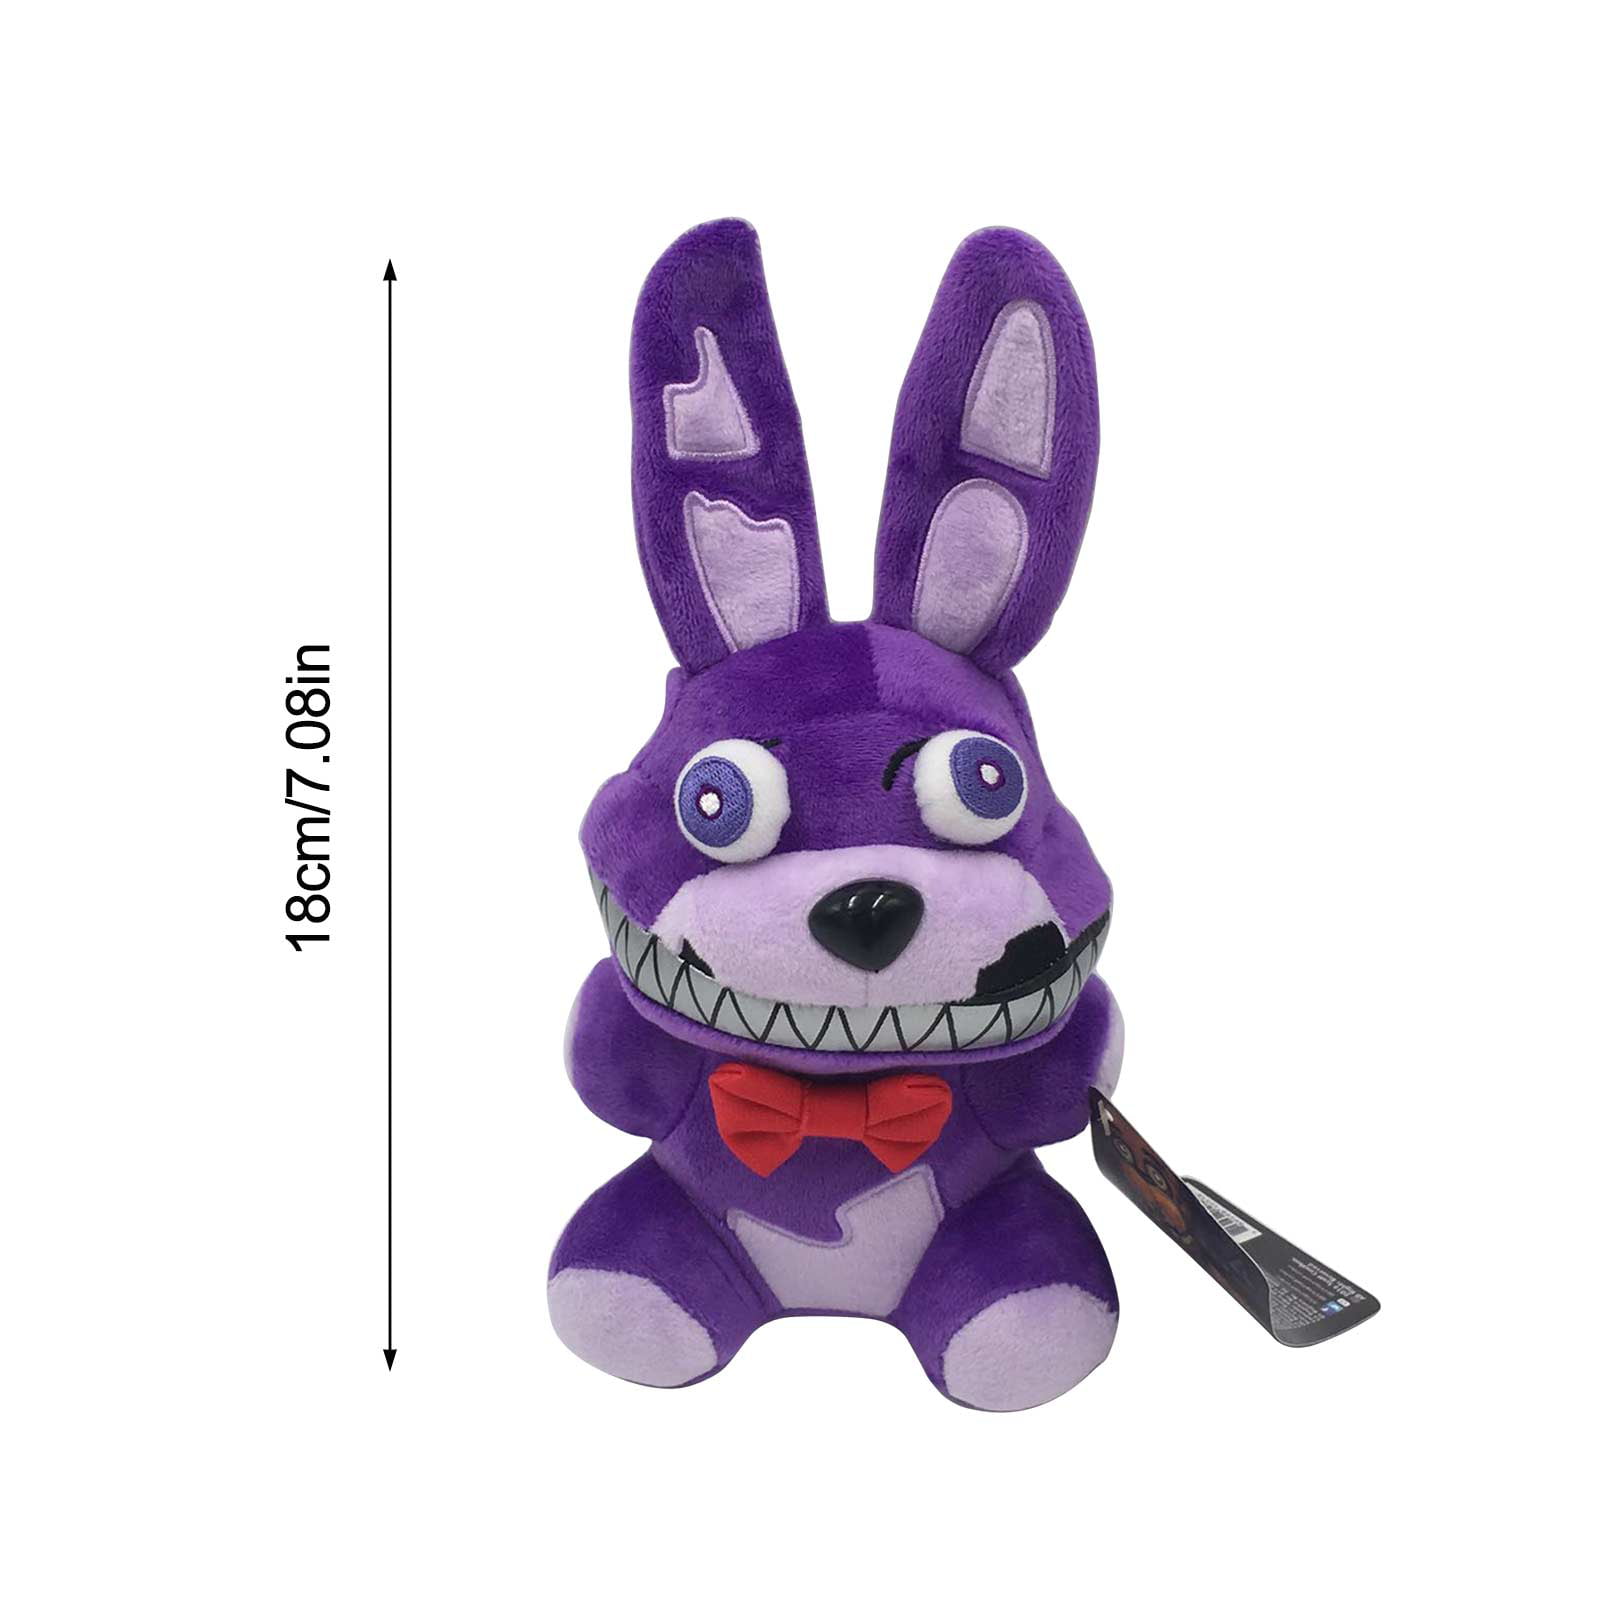 New FNAF Five Nights at Freddy's Blue Rabbit Bonnie Kids Gift Plush Toy 7"